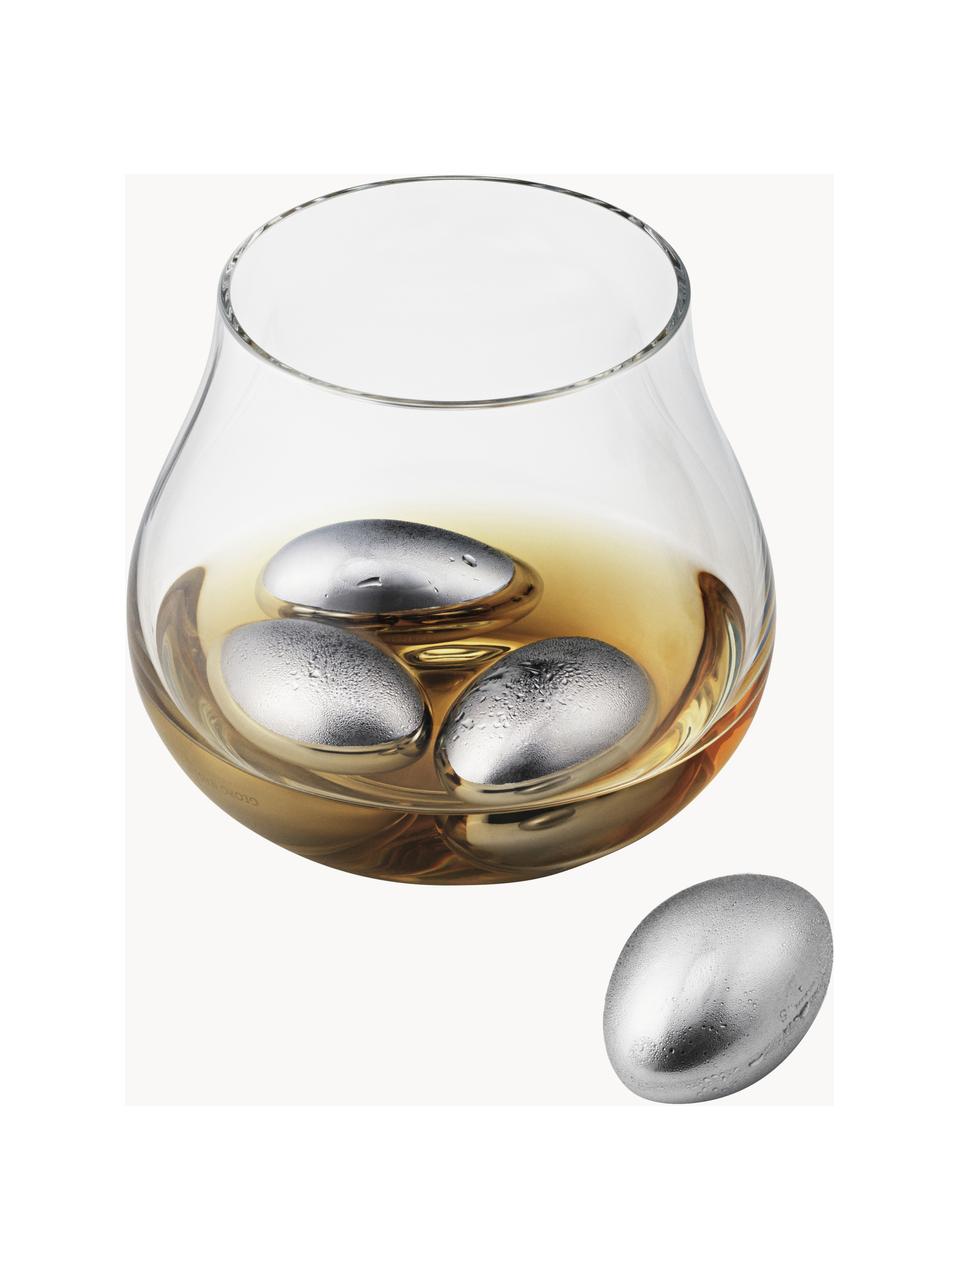 Pietre da whisky in acciaio inox Sky 4 pz, Acciaio inossidabile lucido, Argentato molto lucido, Larg. 2 x Alt. 4 cm